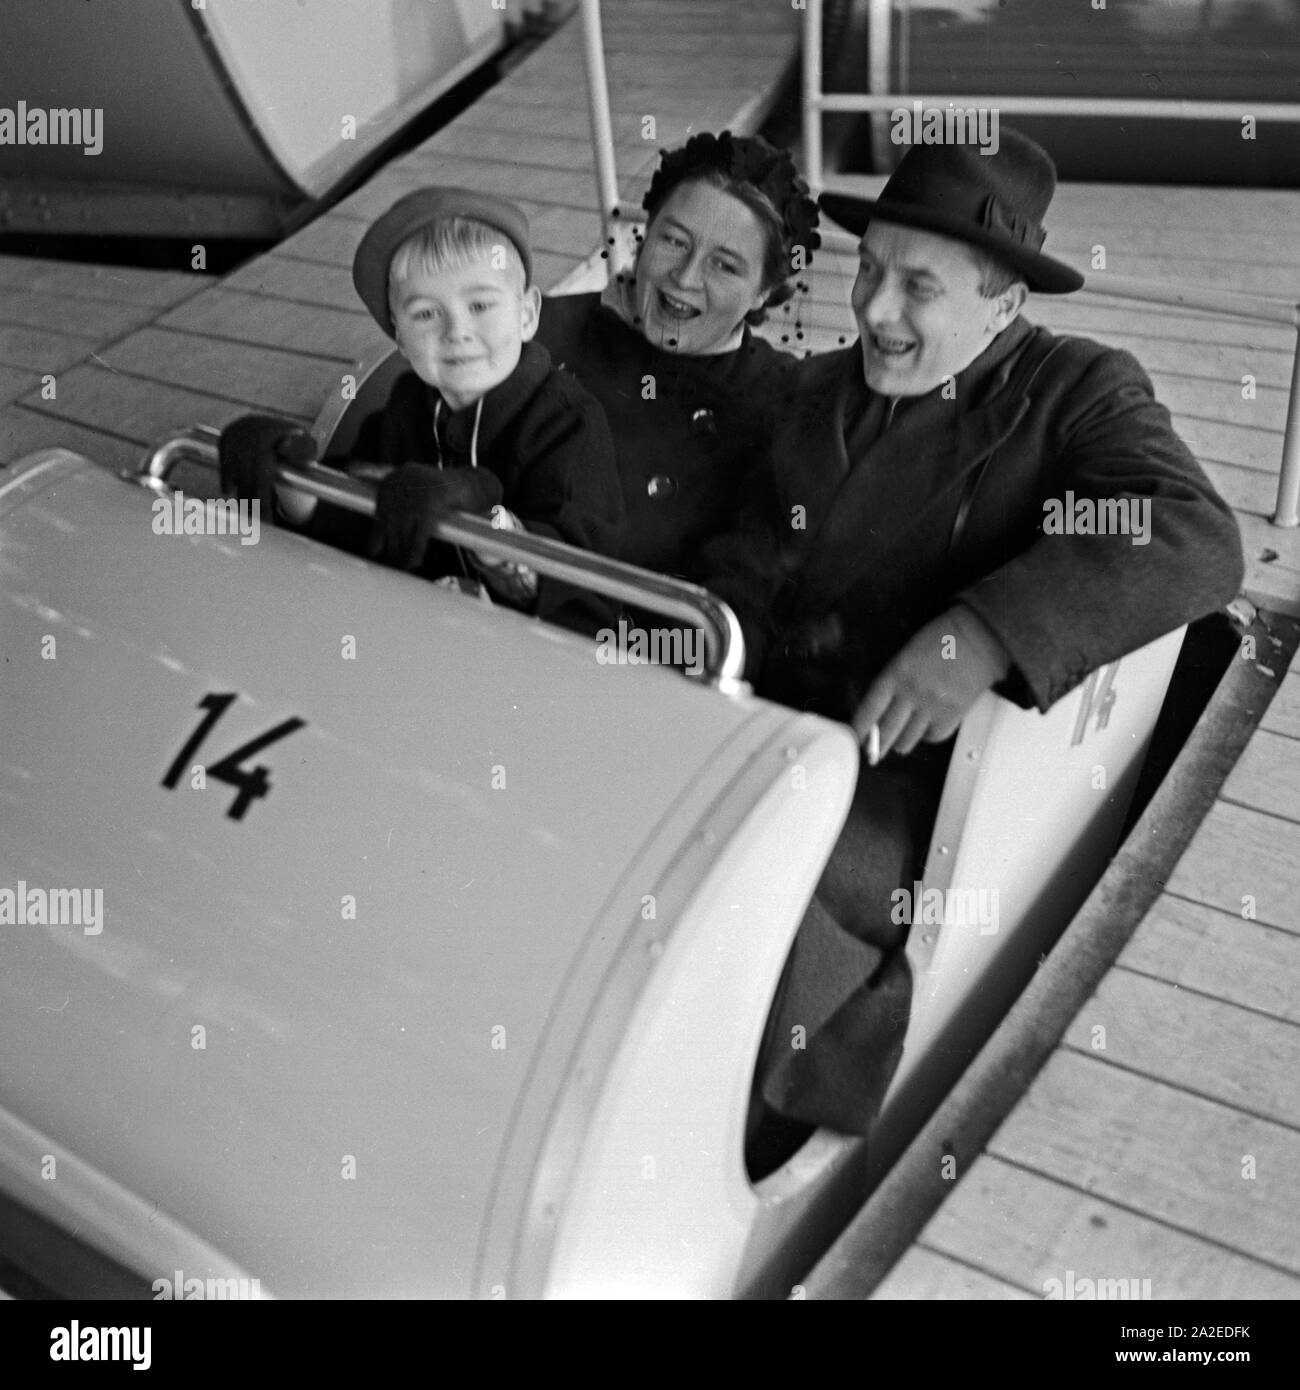 Ein kleiner Junge mit seinen Eltern in der Gondel eines auf dem Fahrgeschäfts Weihnachtsmarkt Deutschland, 1930er Jahre. Un petit garçon avec ses parents dans une nacelle d'un manège à la foire marché de noël, Allemagne 1930. Banque D'Images